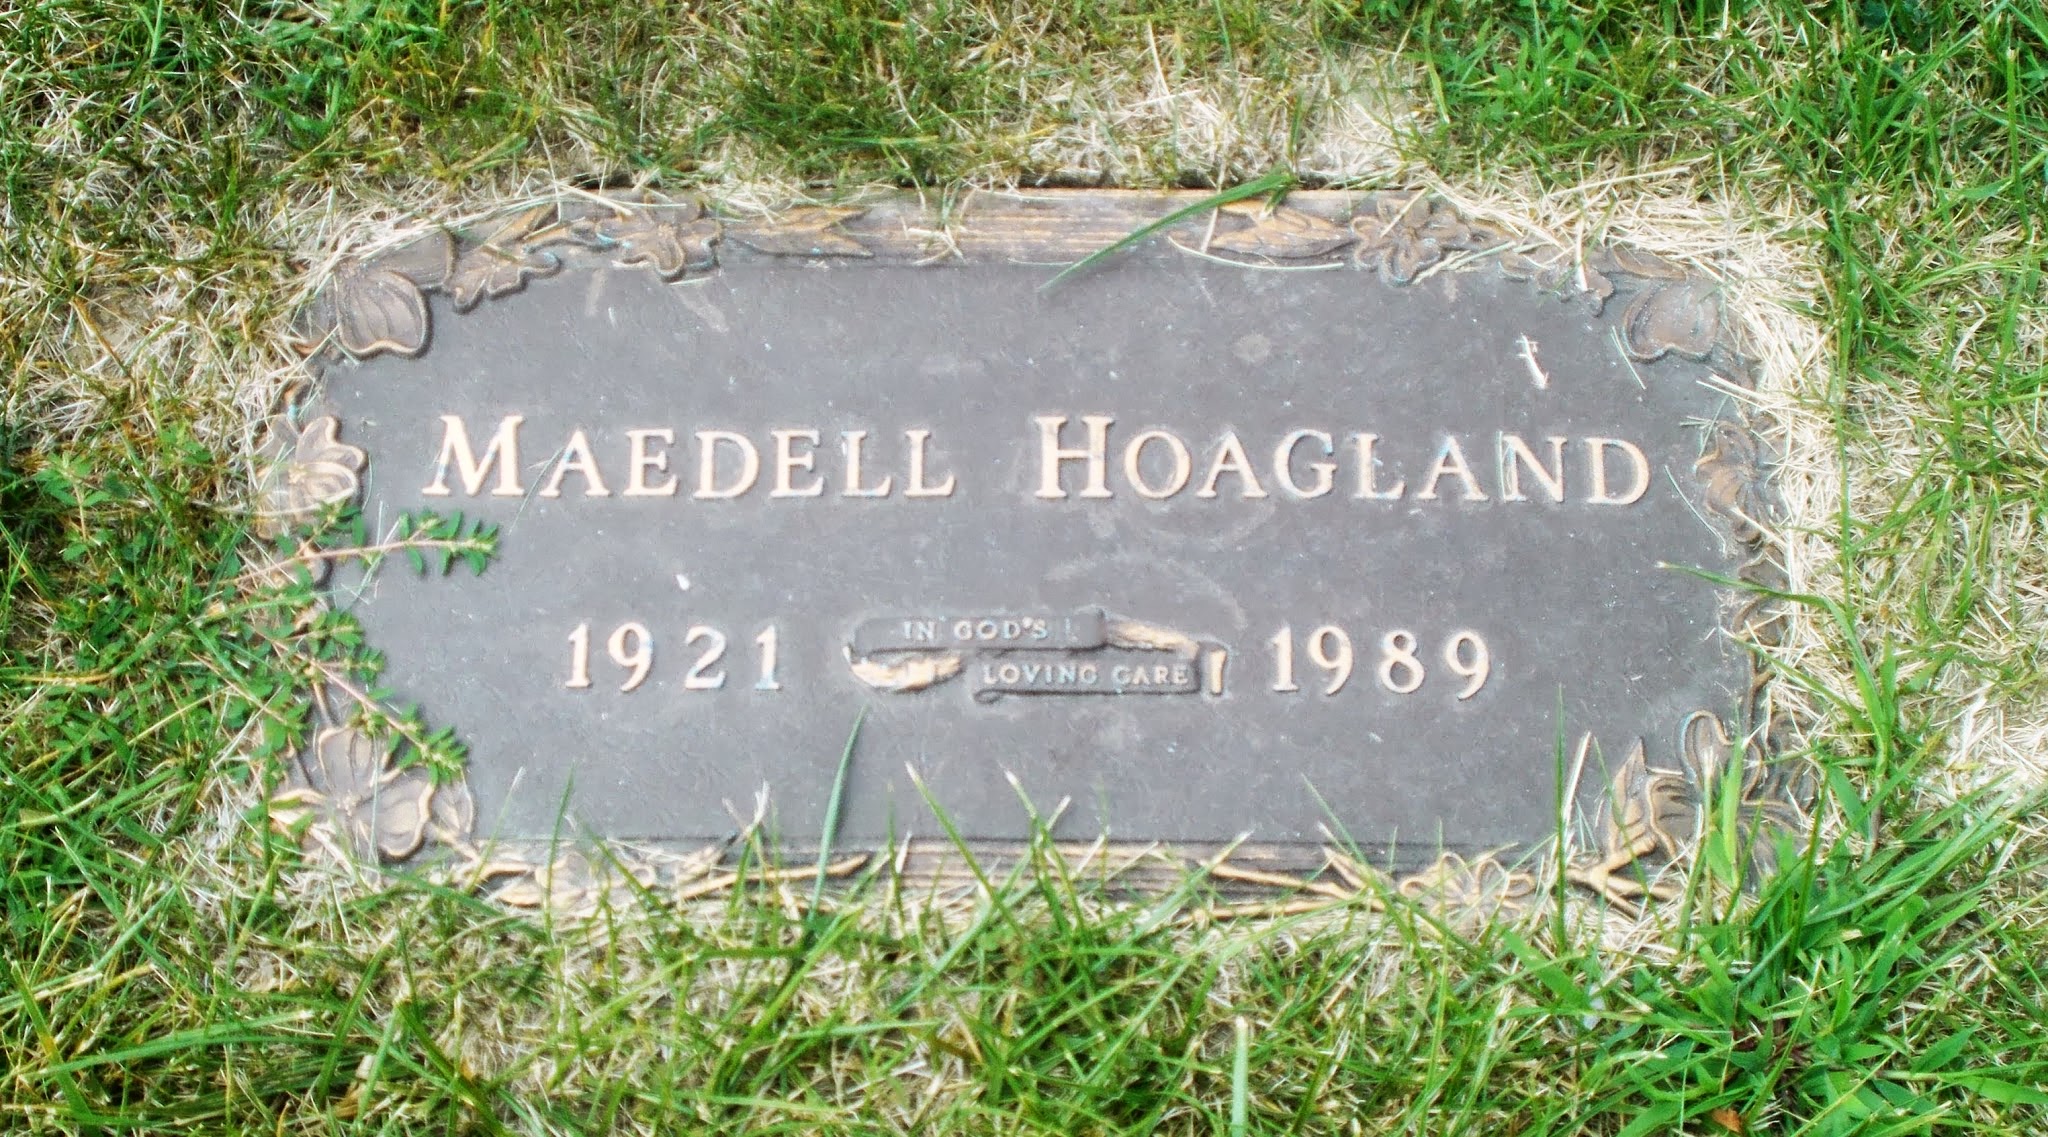 Maedell Hoagland